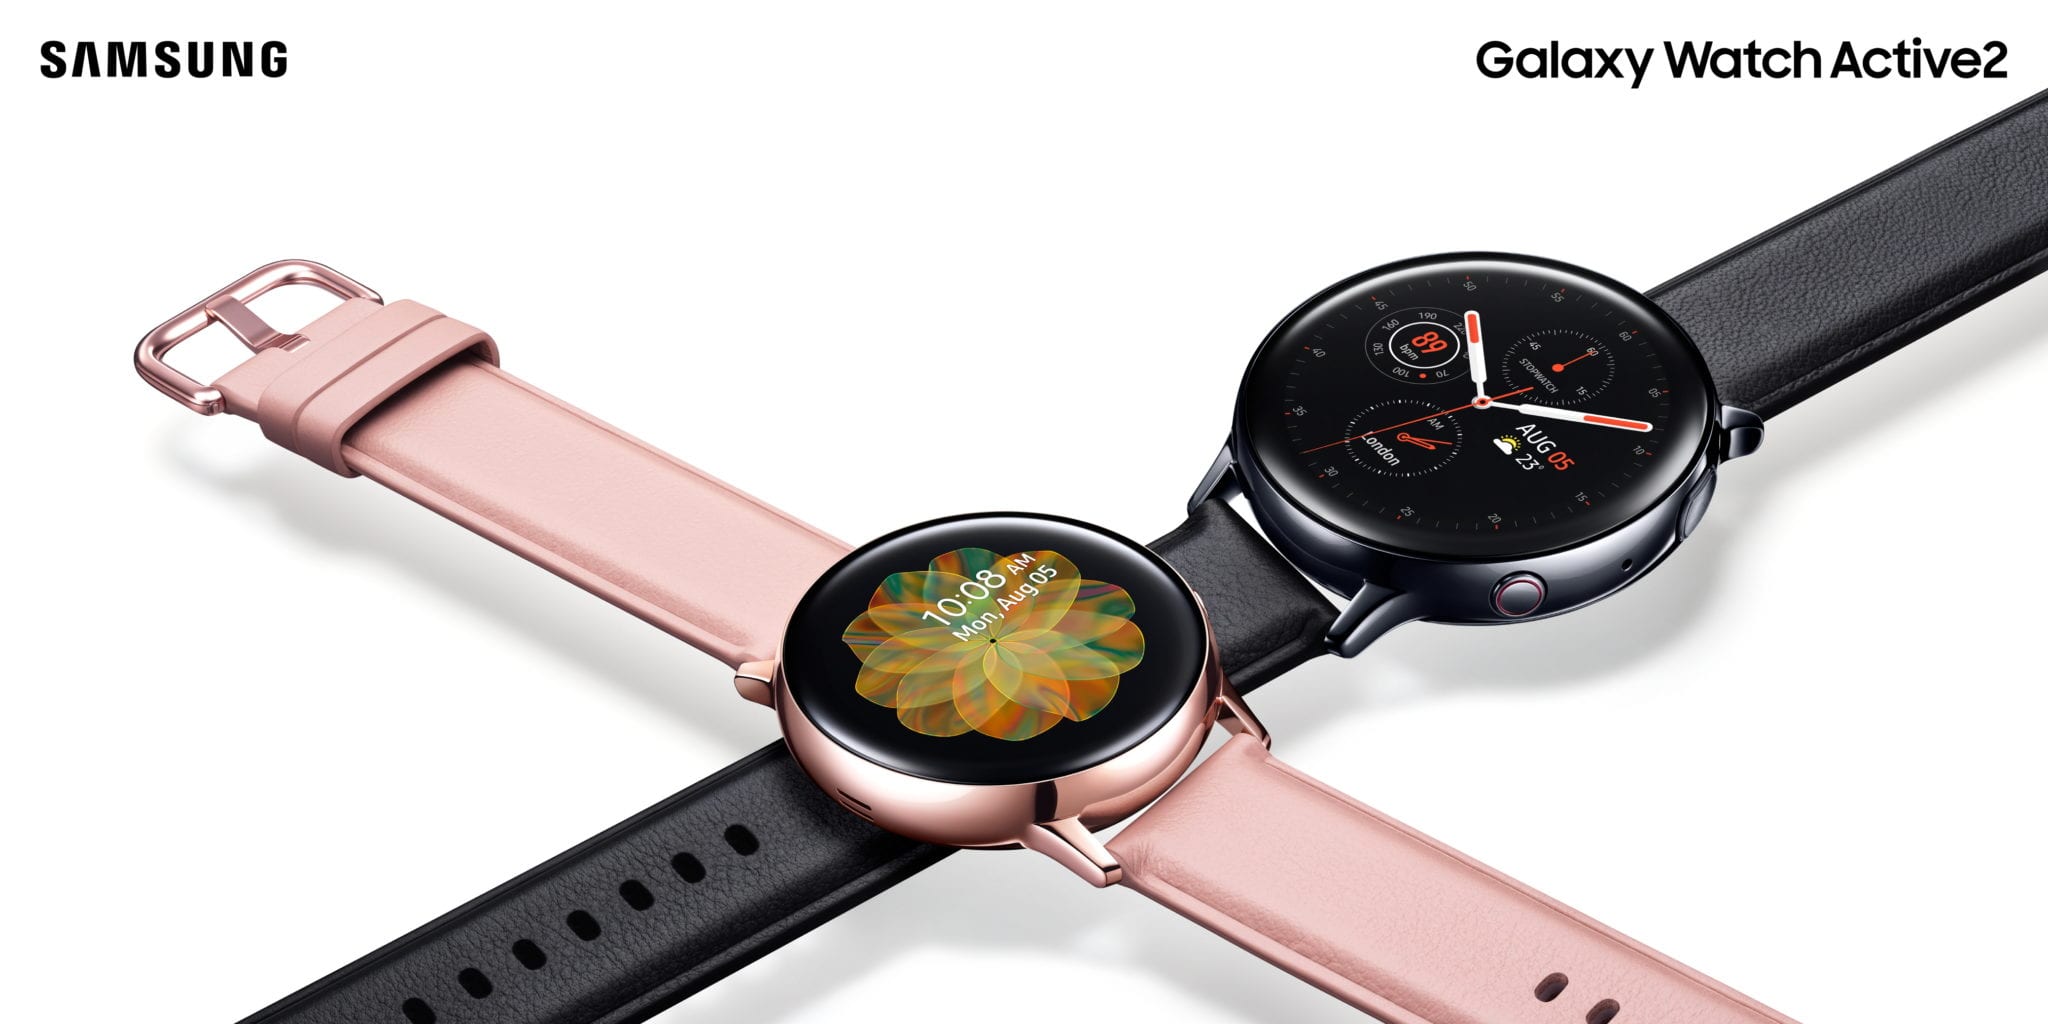 Galaxy Watch Active2 a fost lansat oficial, vezi prezentarea video